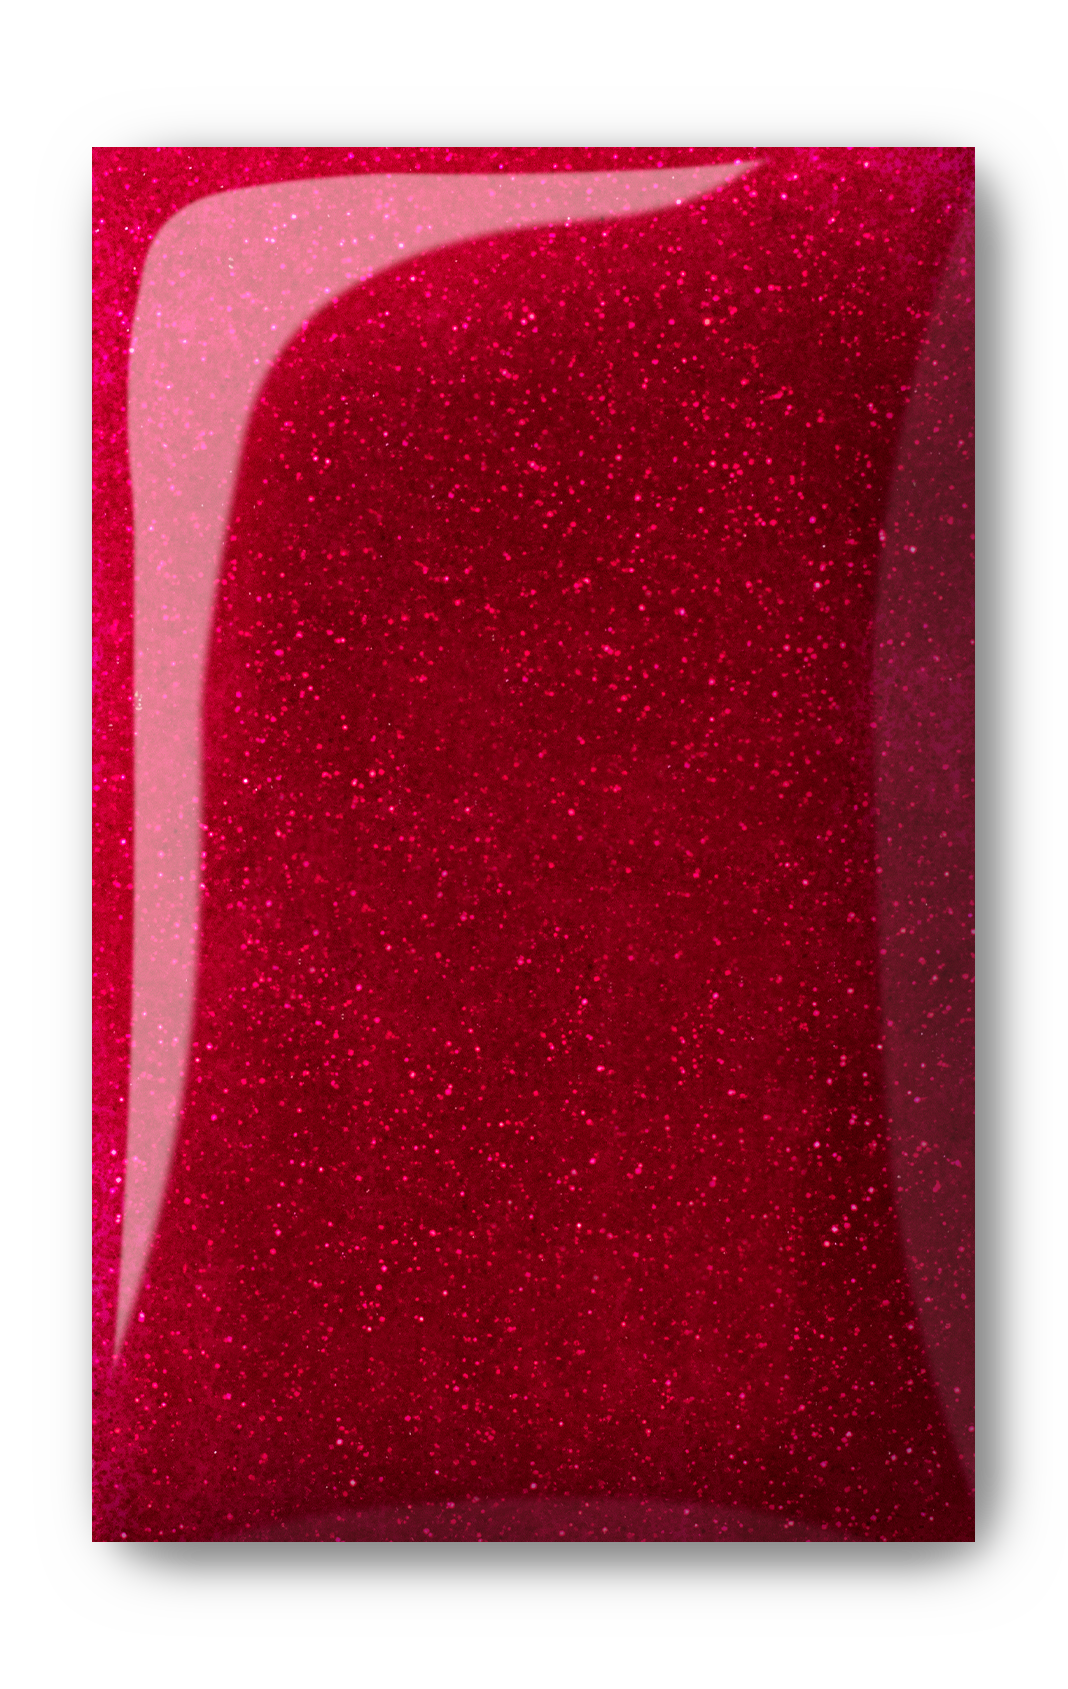 Light Elegance P+ Soak Off Glitter Gel - Red Chandelier :: New Packaging - Creata Beauty - Professional Beauty Products